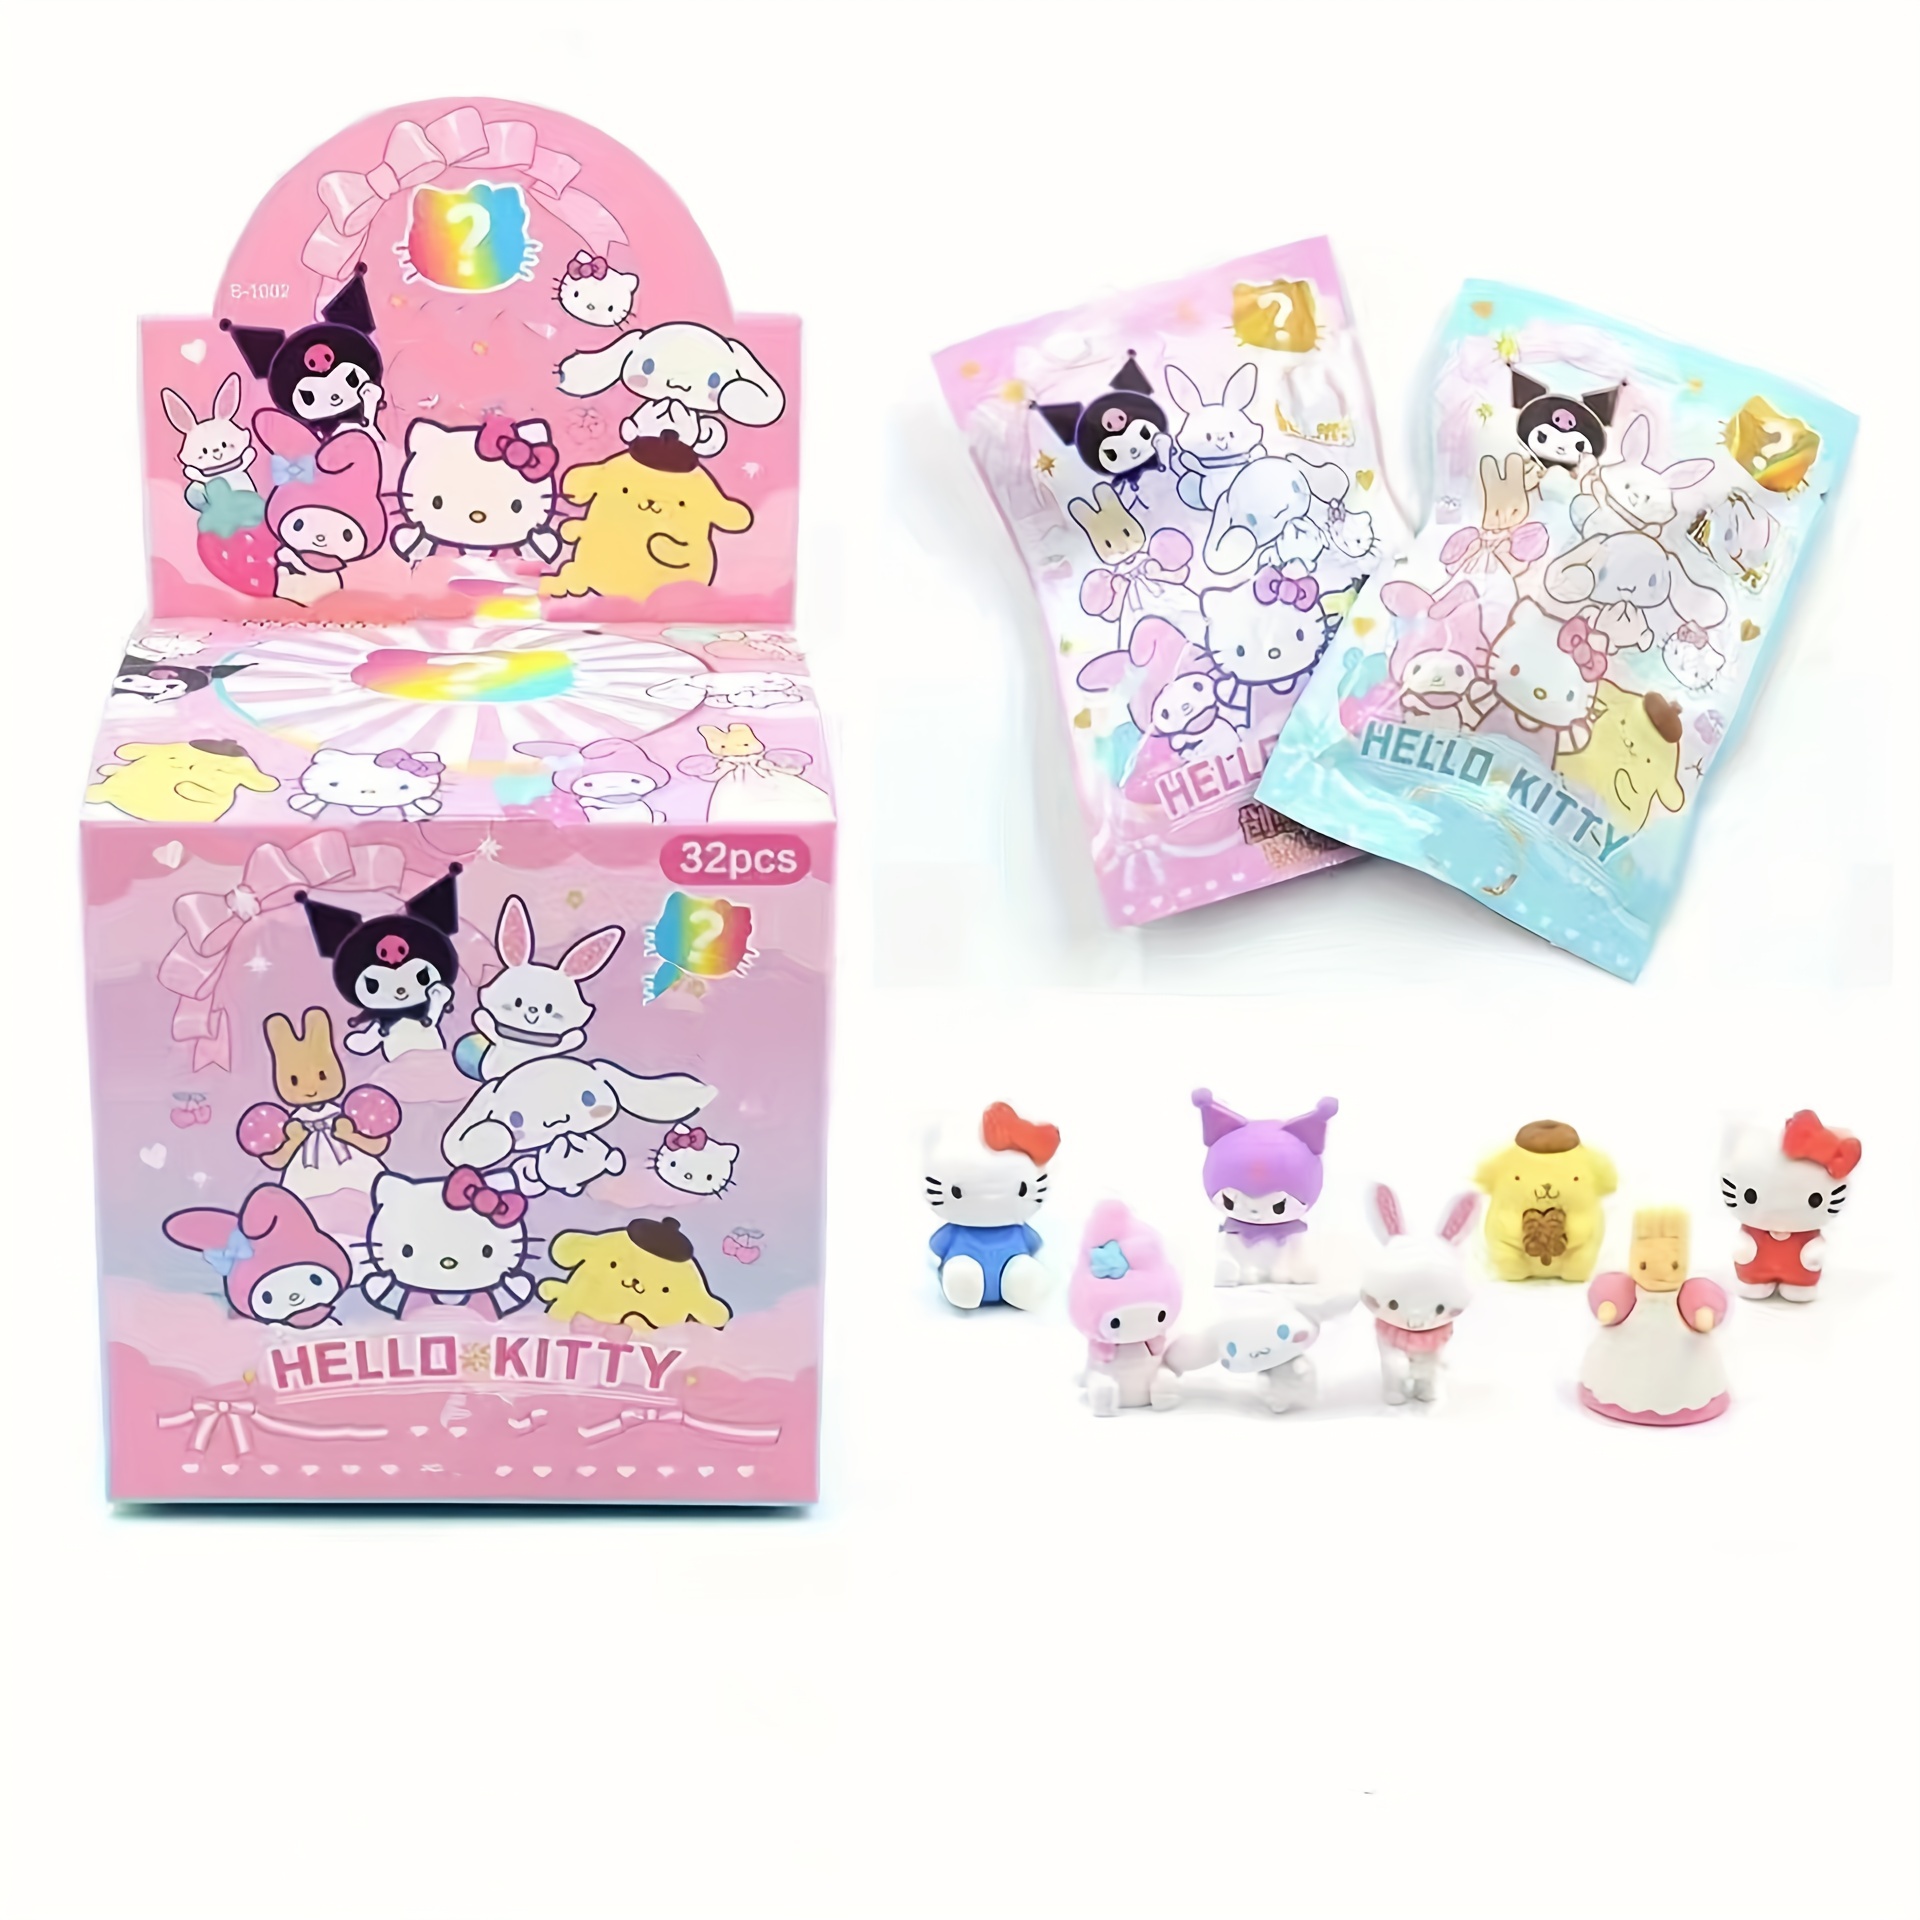 New Sanrio Blind Box Kawaii Kuromi Cinnamoroll My Melody Figures Dolls  Blind Bag Toy For Fans Gift